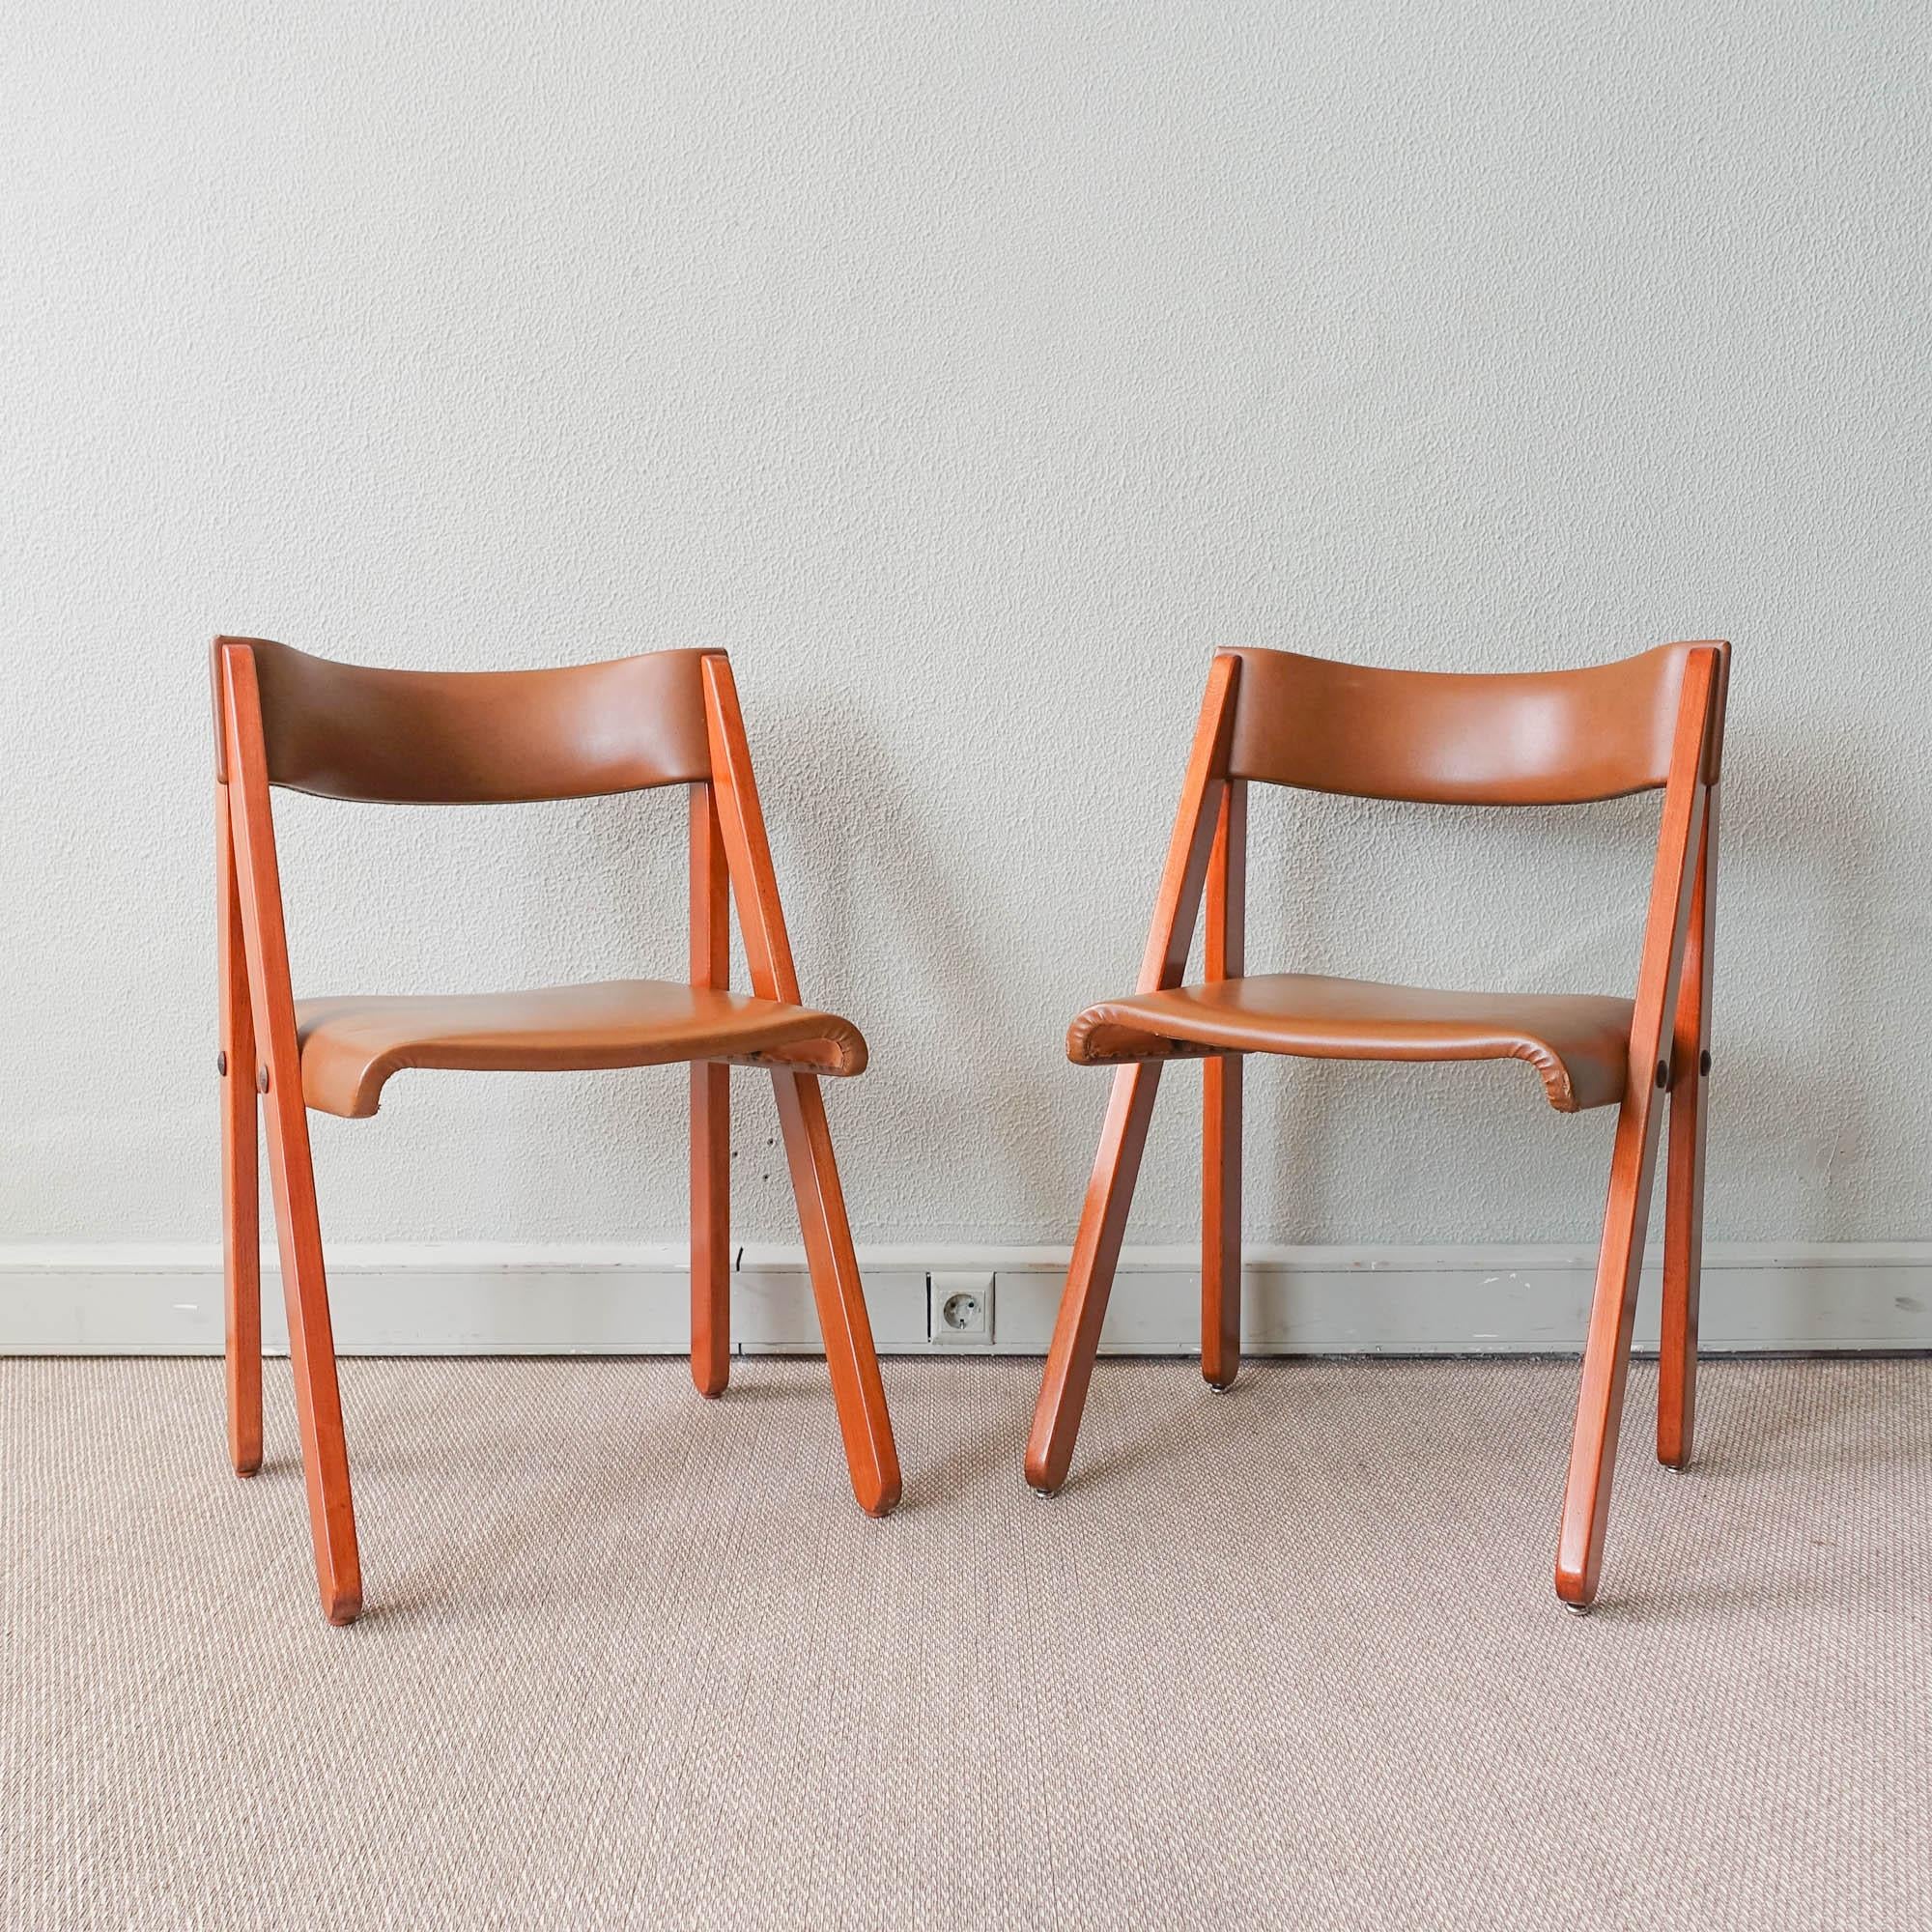 Late 20th Century Set of 8 Chairs, Model Noruega, by Gastão Machado for Móveis Olaio, 1978 For Sale